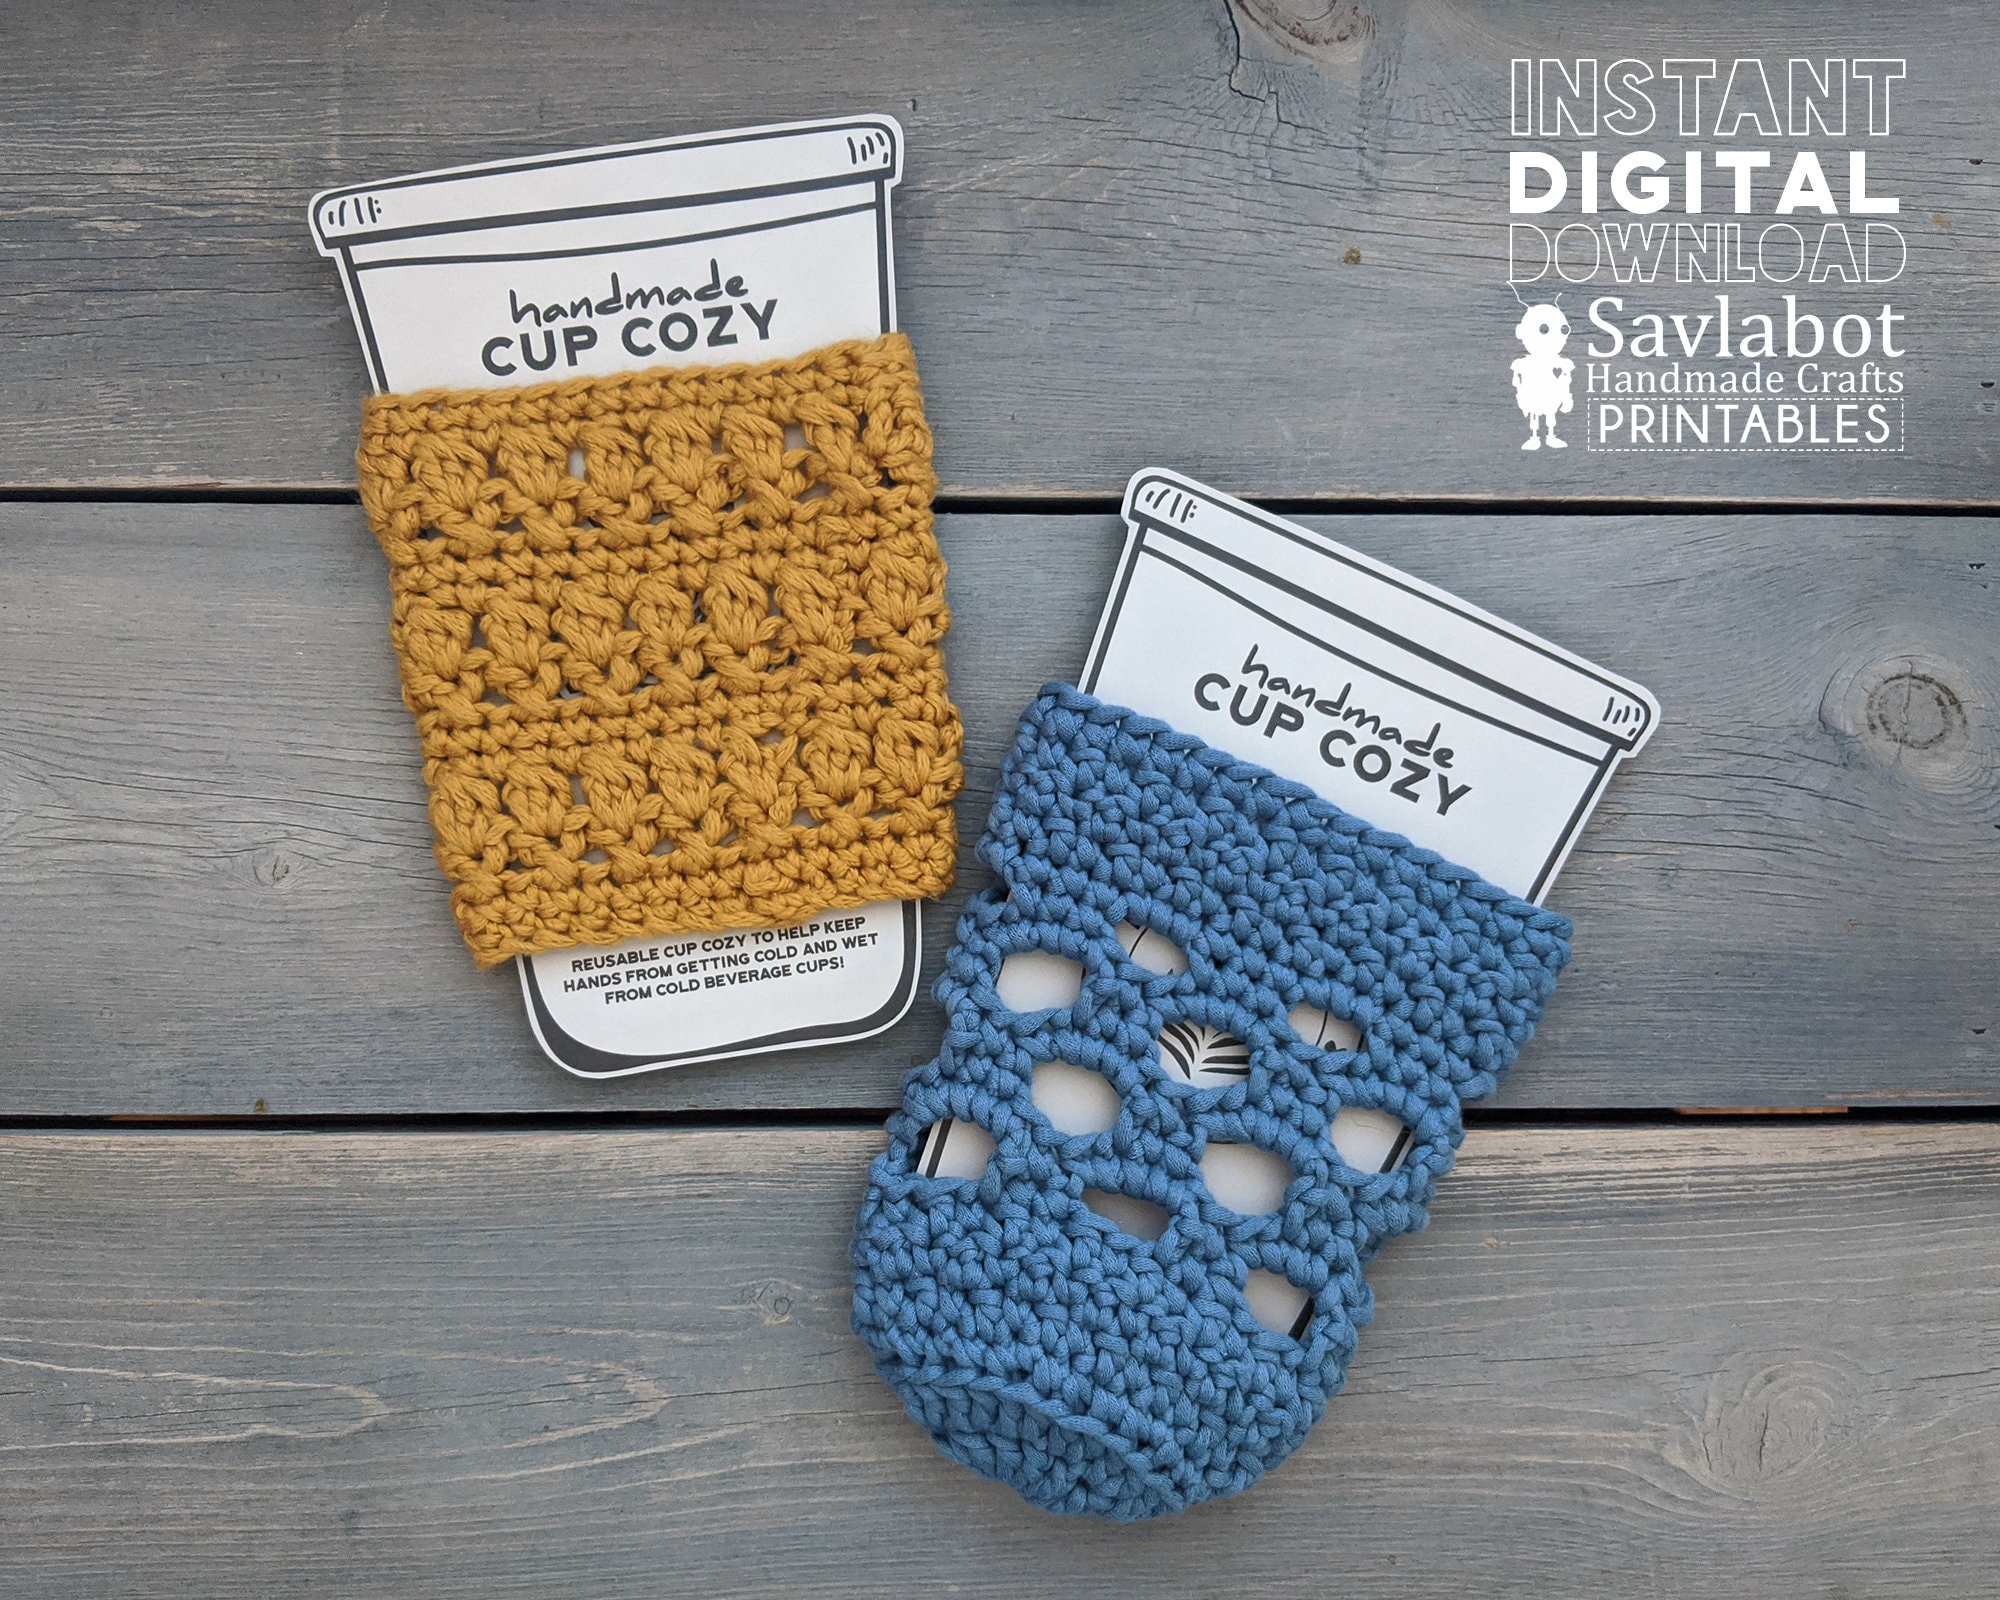 Free Crochet Pattern: Sunshine Iced Coffee Cup Cozy - Avery Lane Creations